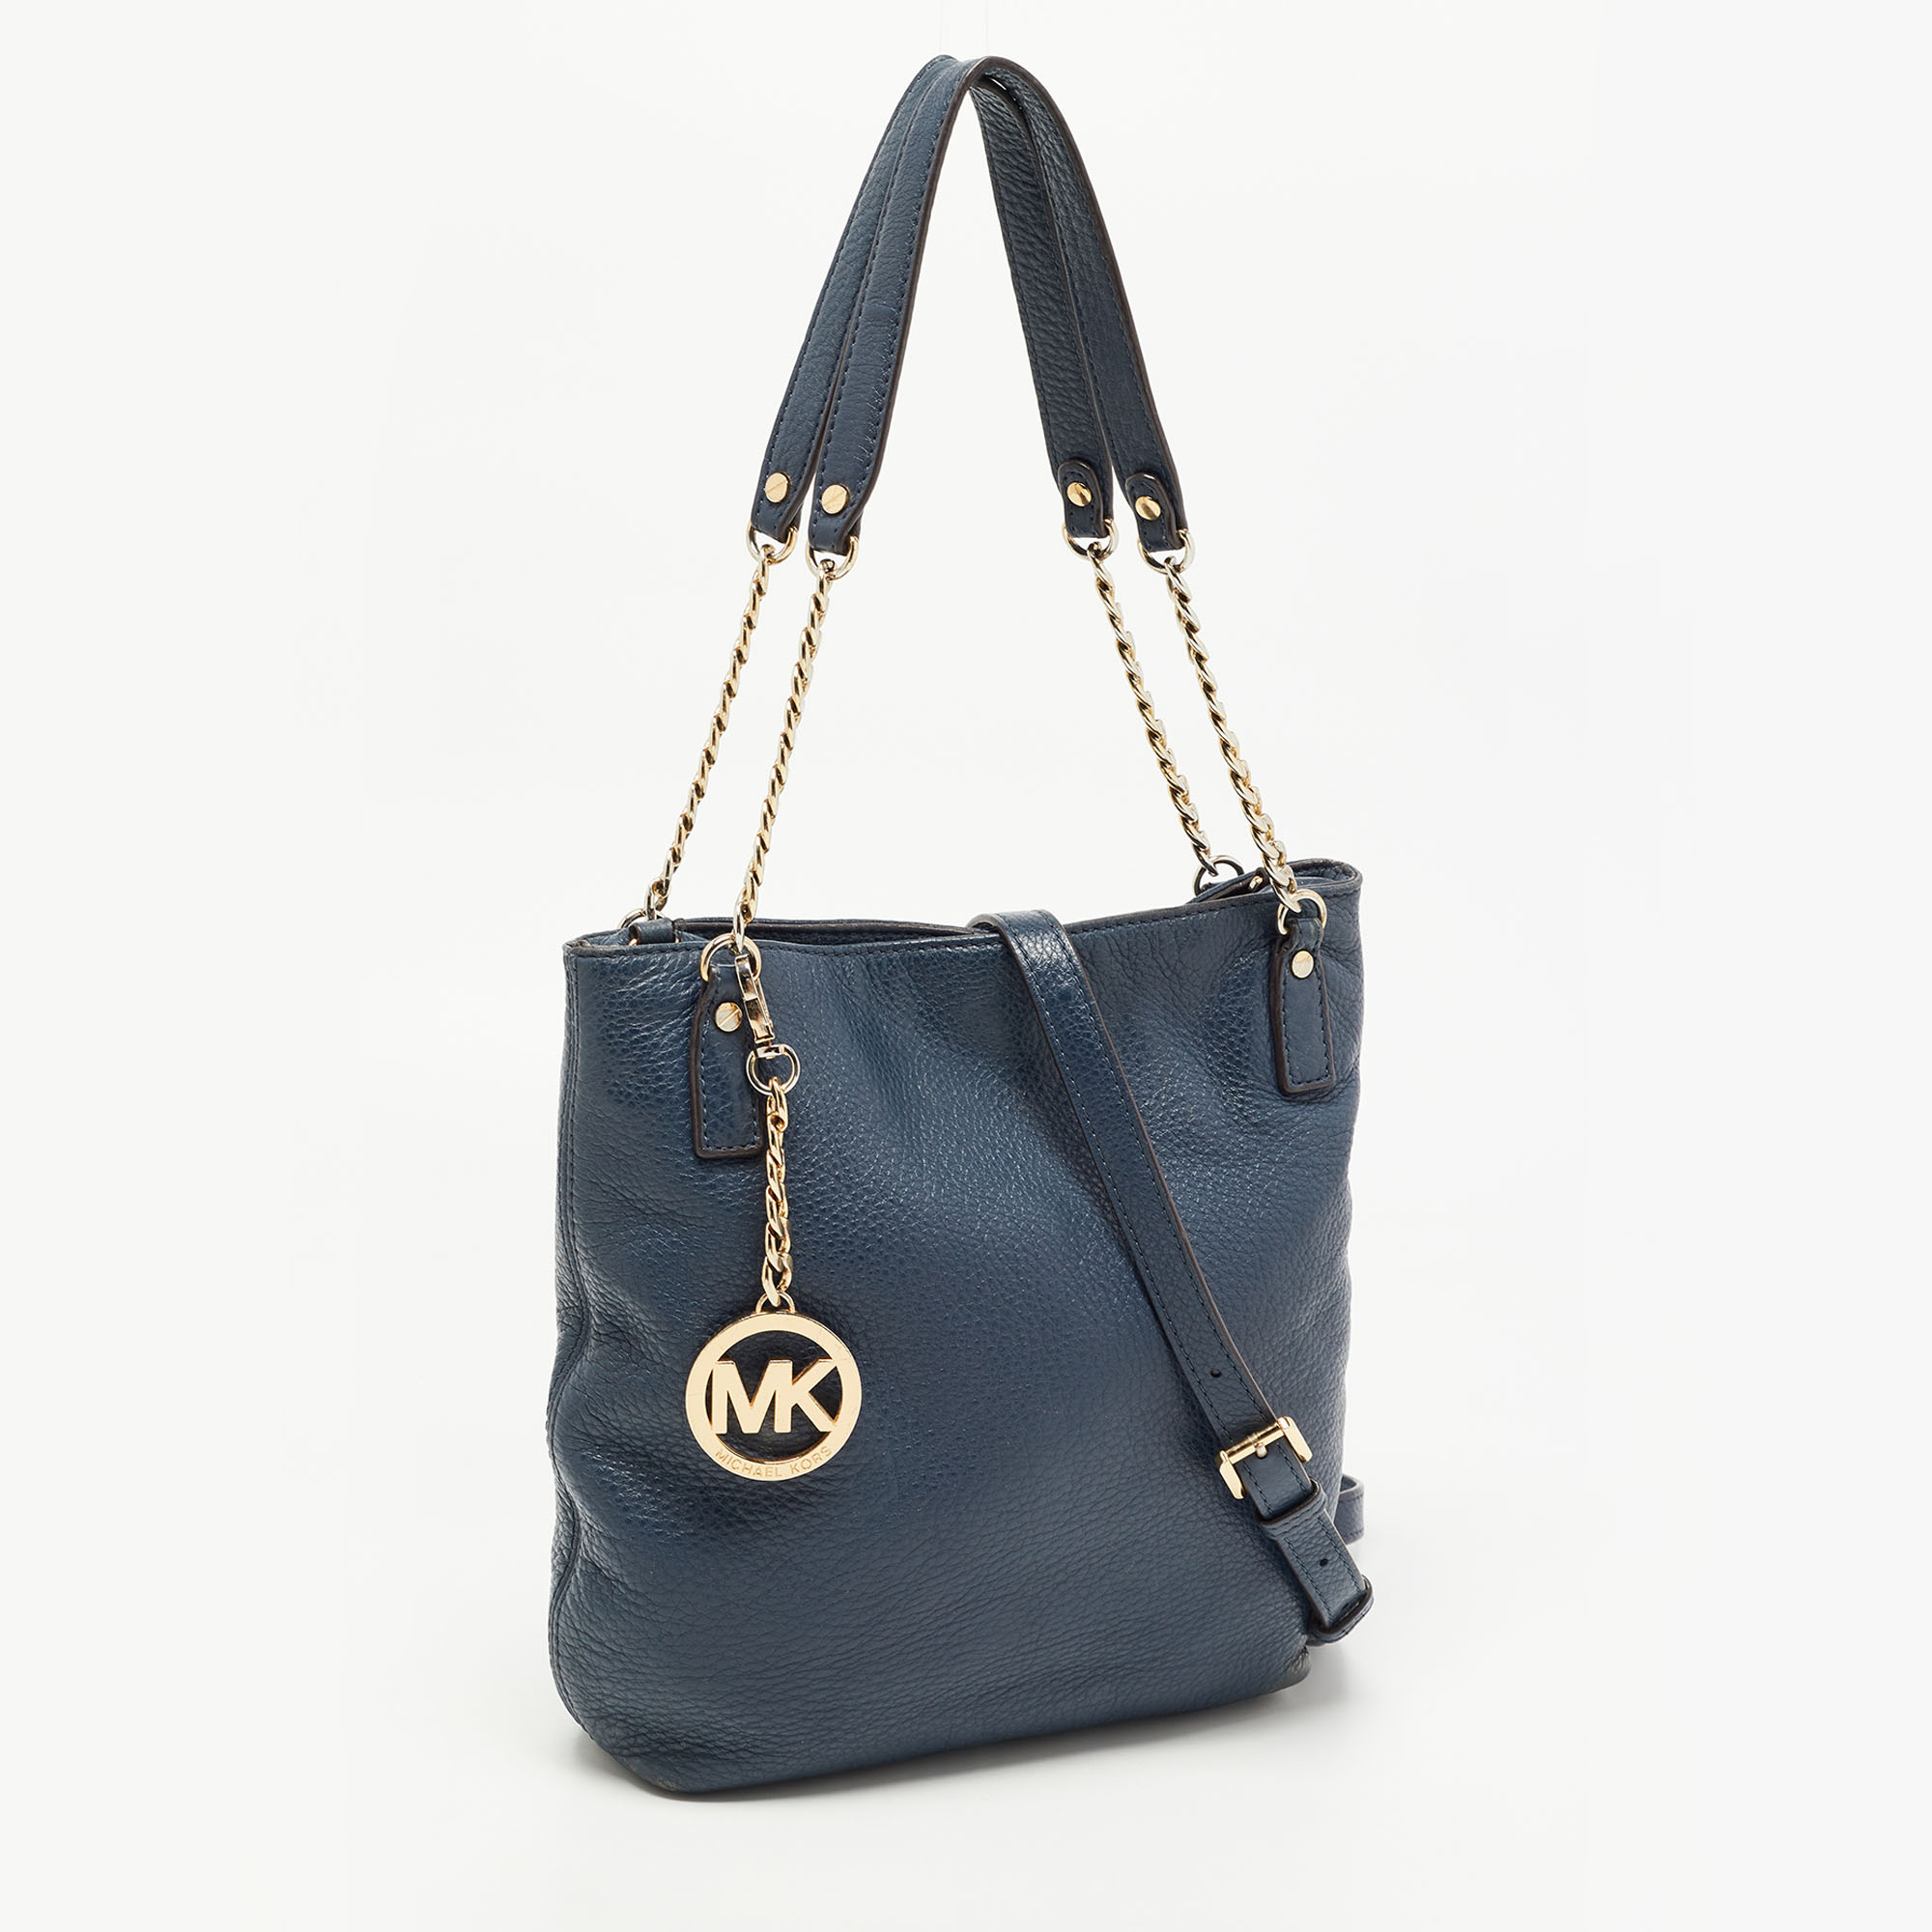 Michael Kors Navy Blue Soft Leather Chain Shoulder Bag